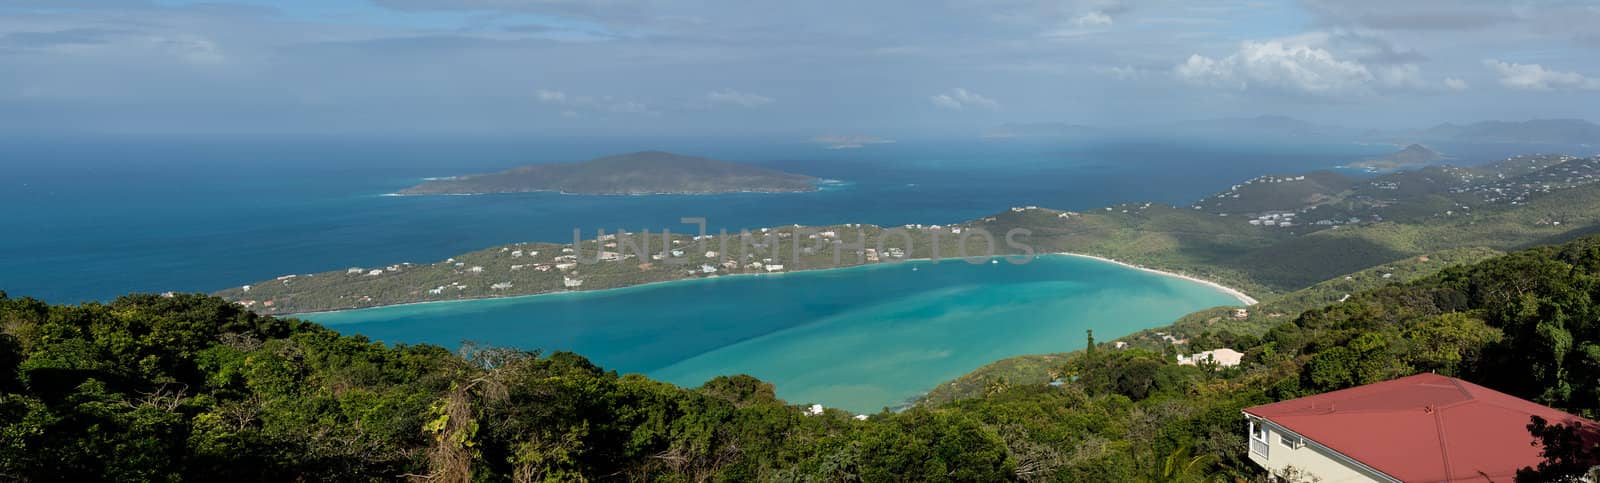 Broad panorama of Magen or Magens Bay on St Thomas US Virgin Islands USVI